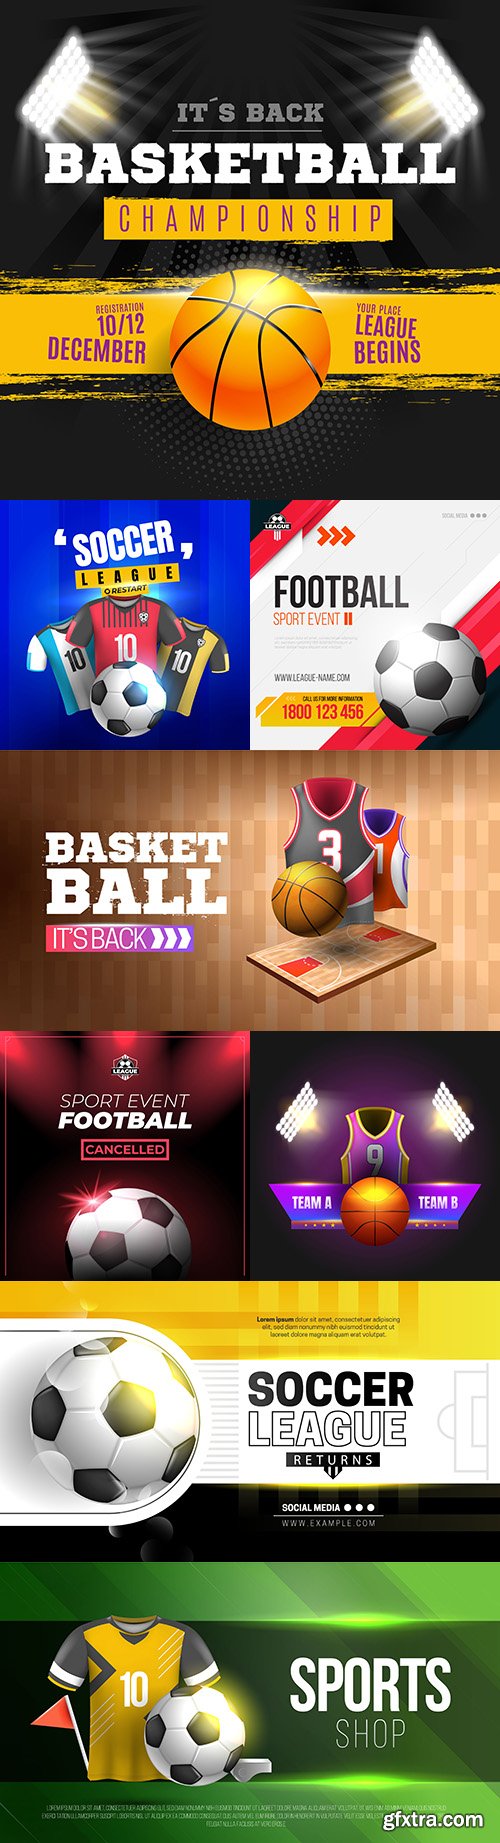 Basketball and football league design sports banner